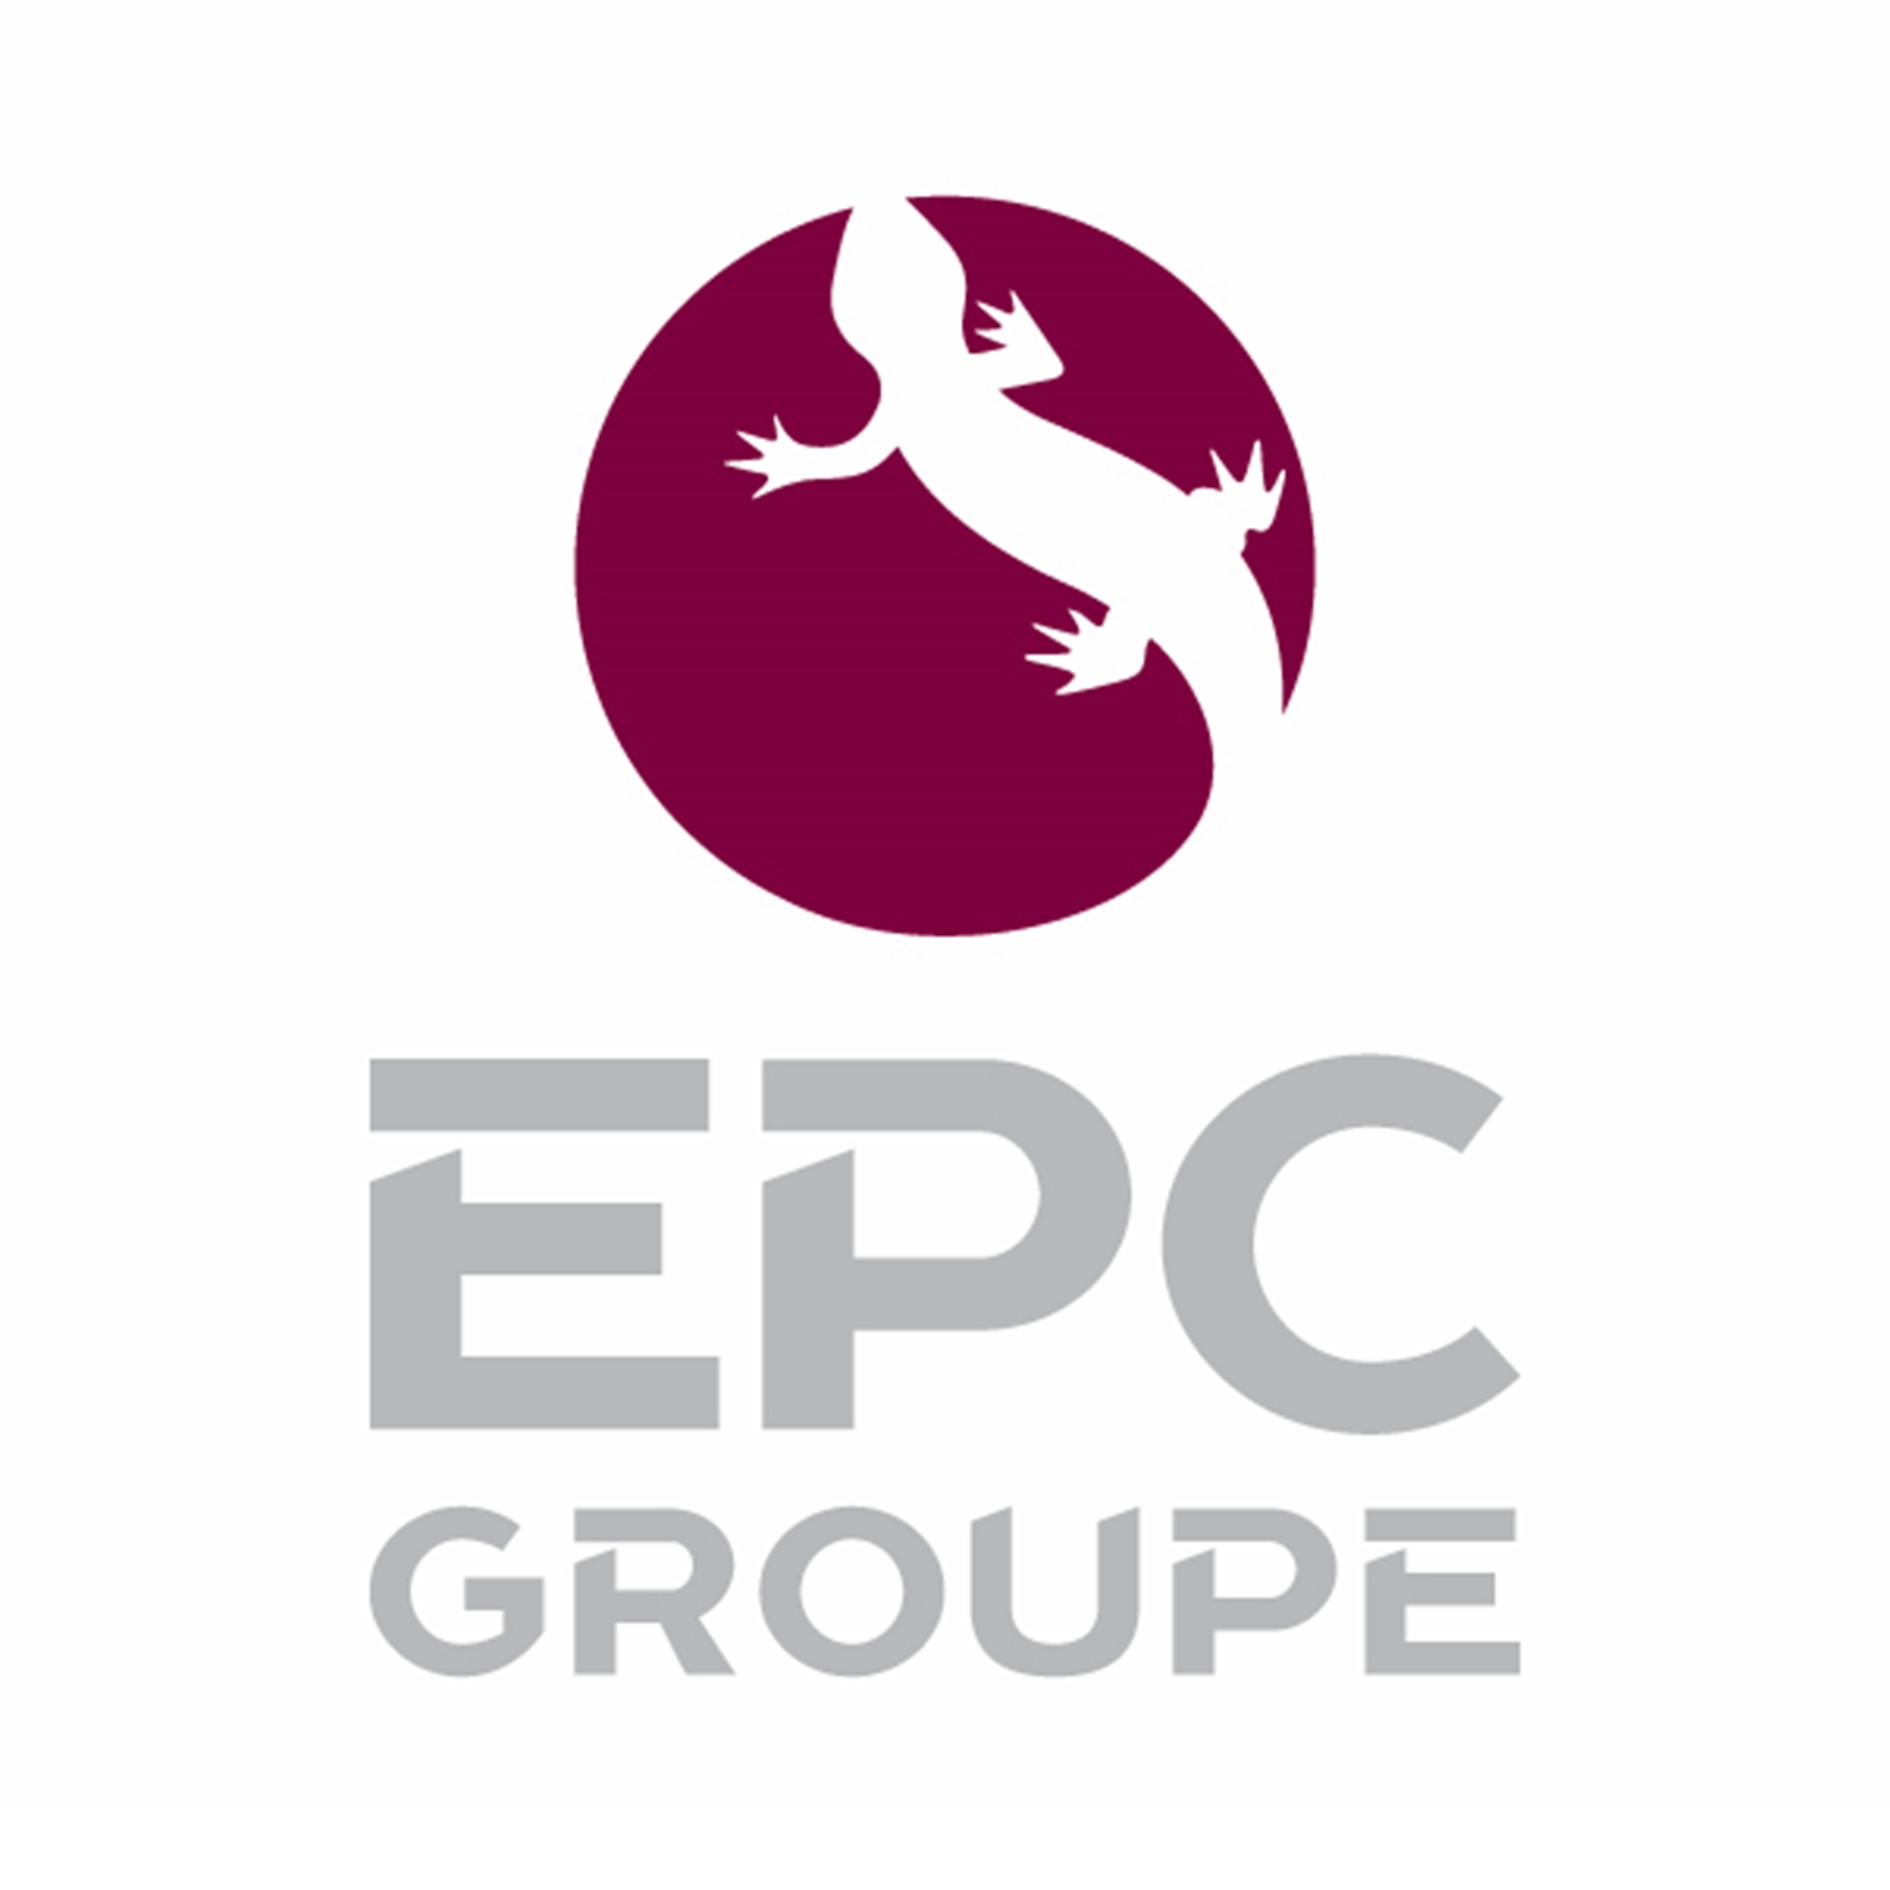 Epc Groupe